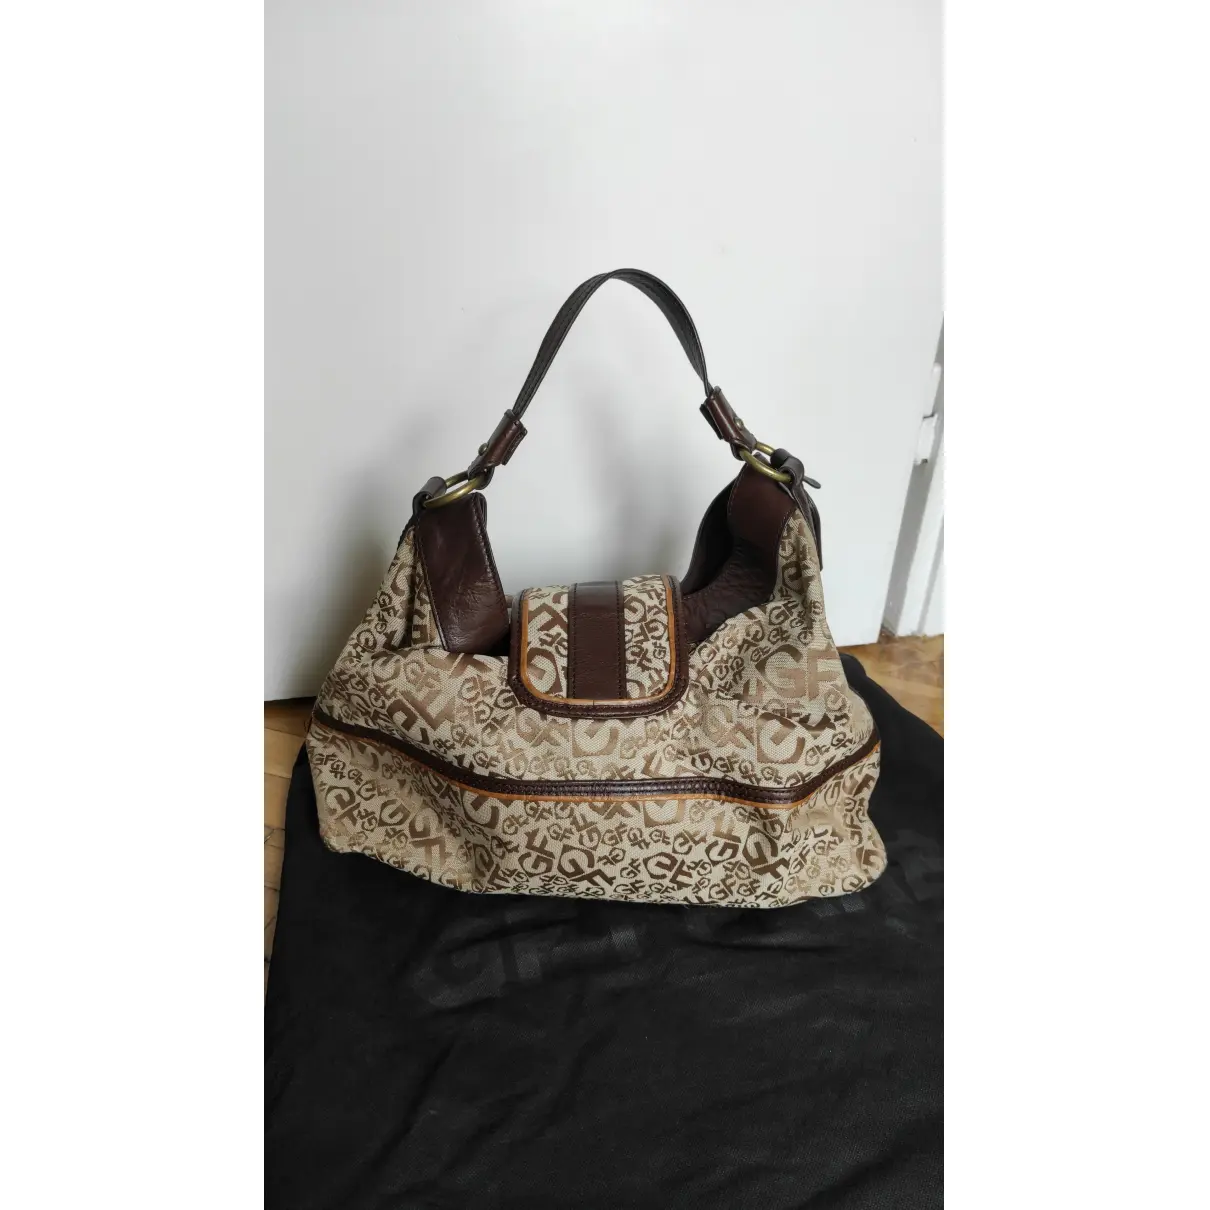 Buy Gianfranco Ferré Cloth handbag online